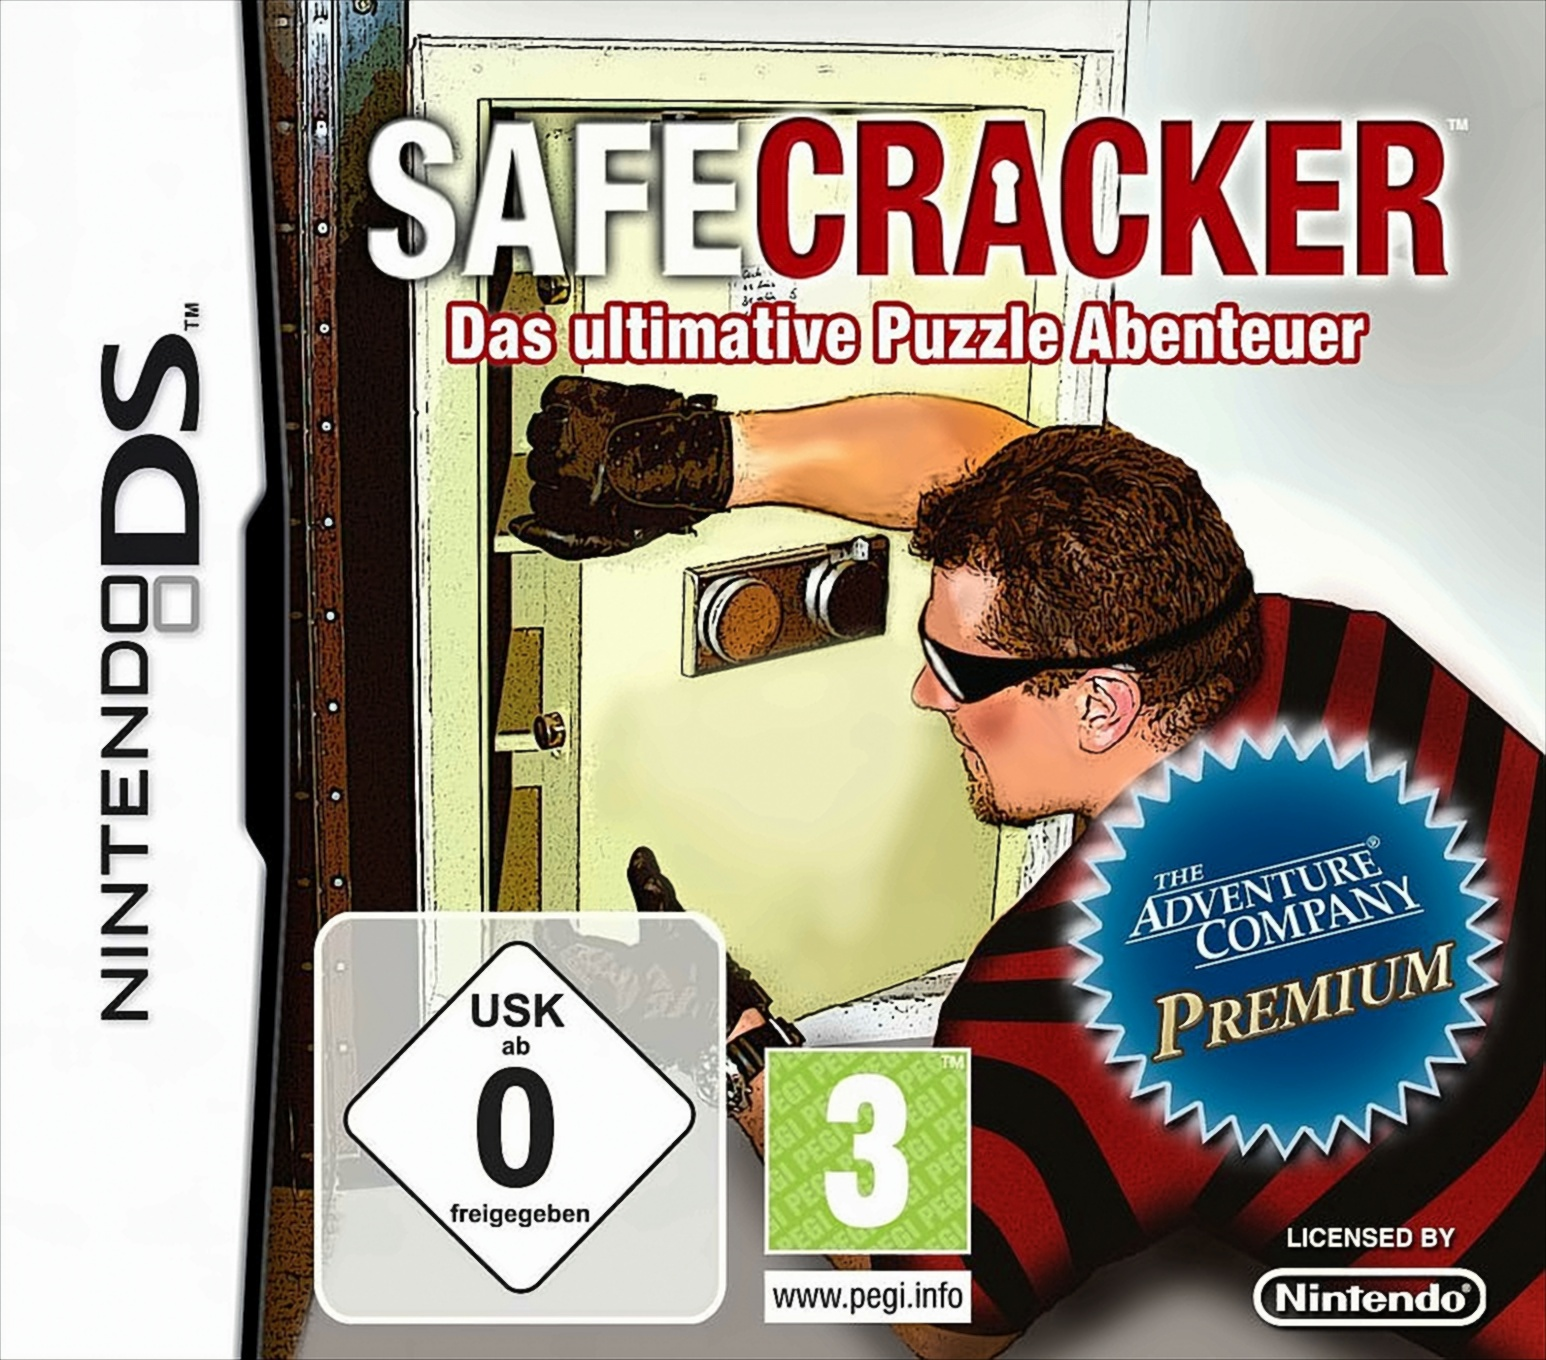 Abenteuer - Puzzle ultimative - Das [Nintendo DS] SafeCracker